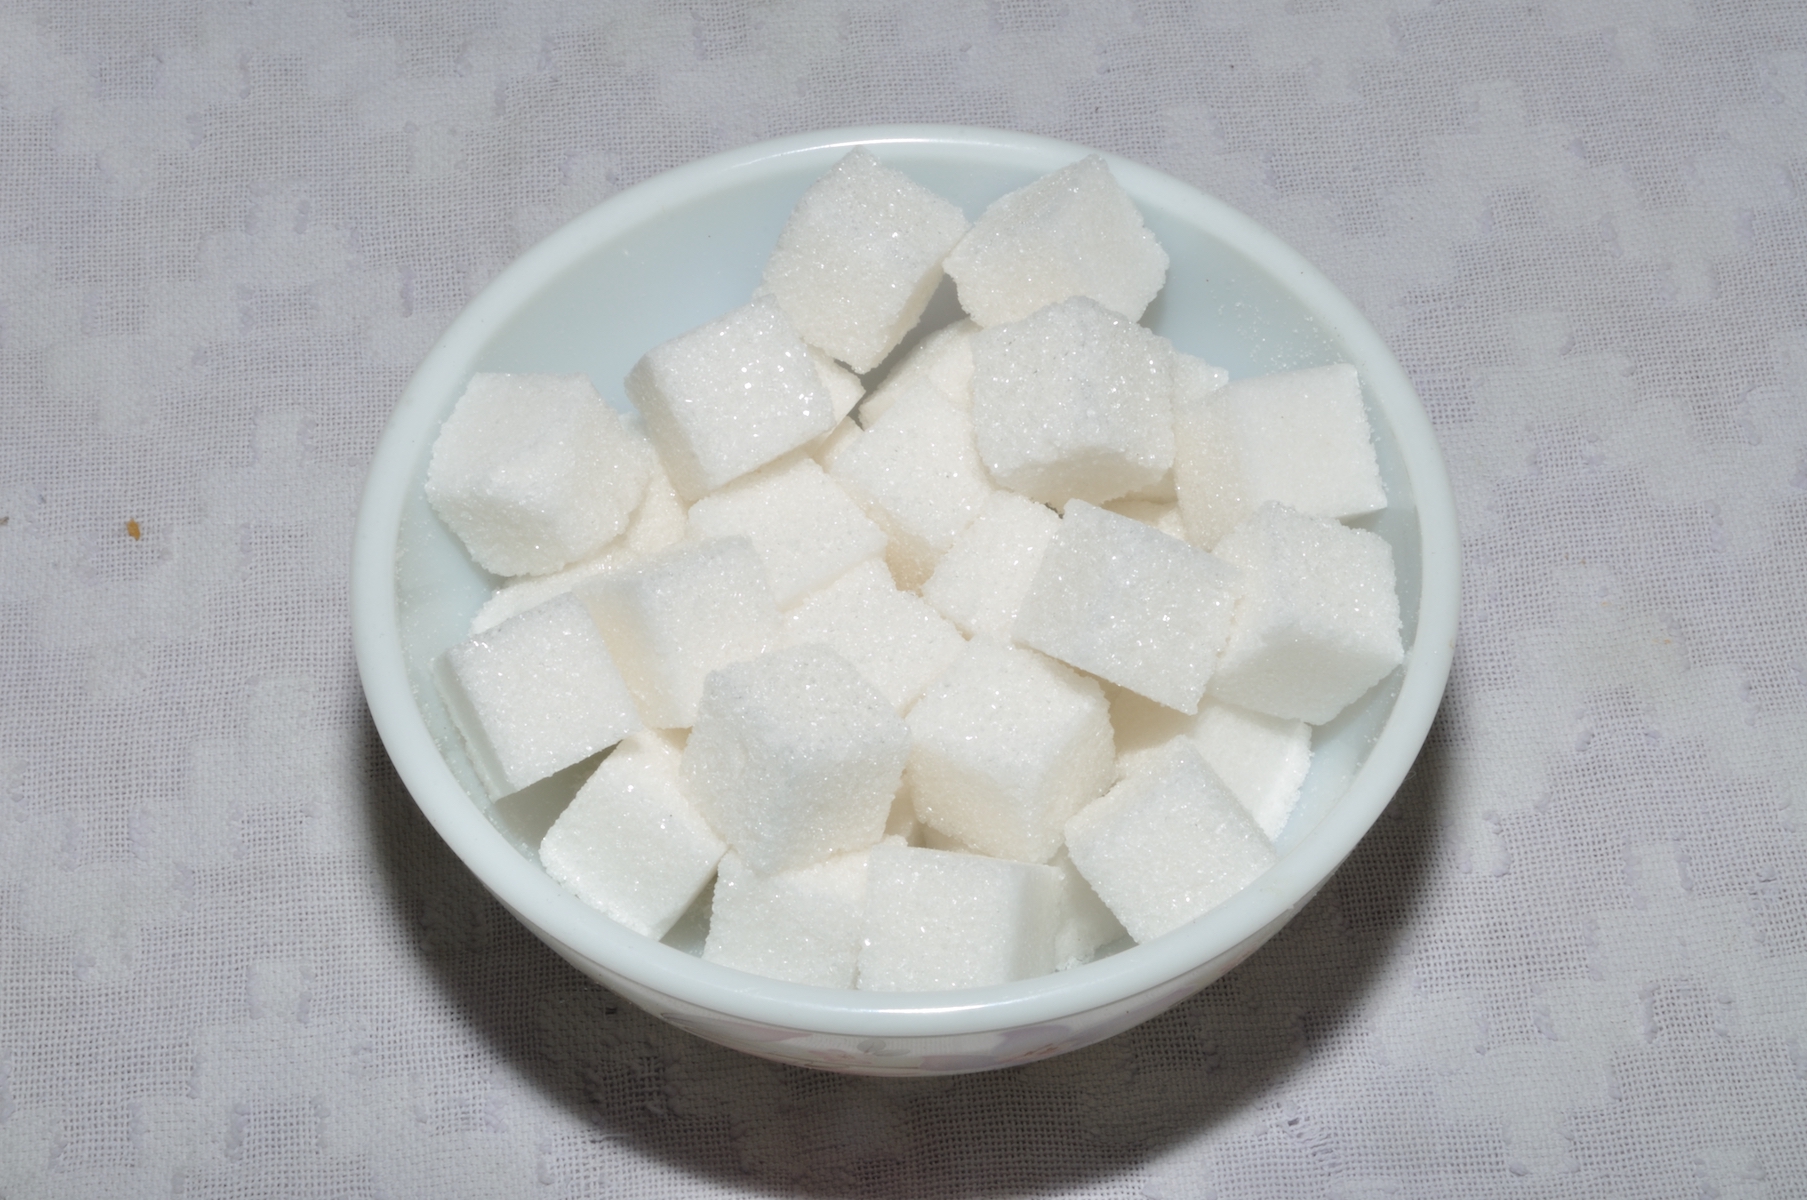 photograph of a bowl of sugar cubes